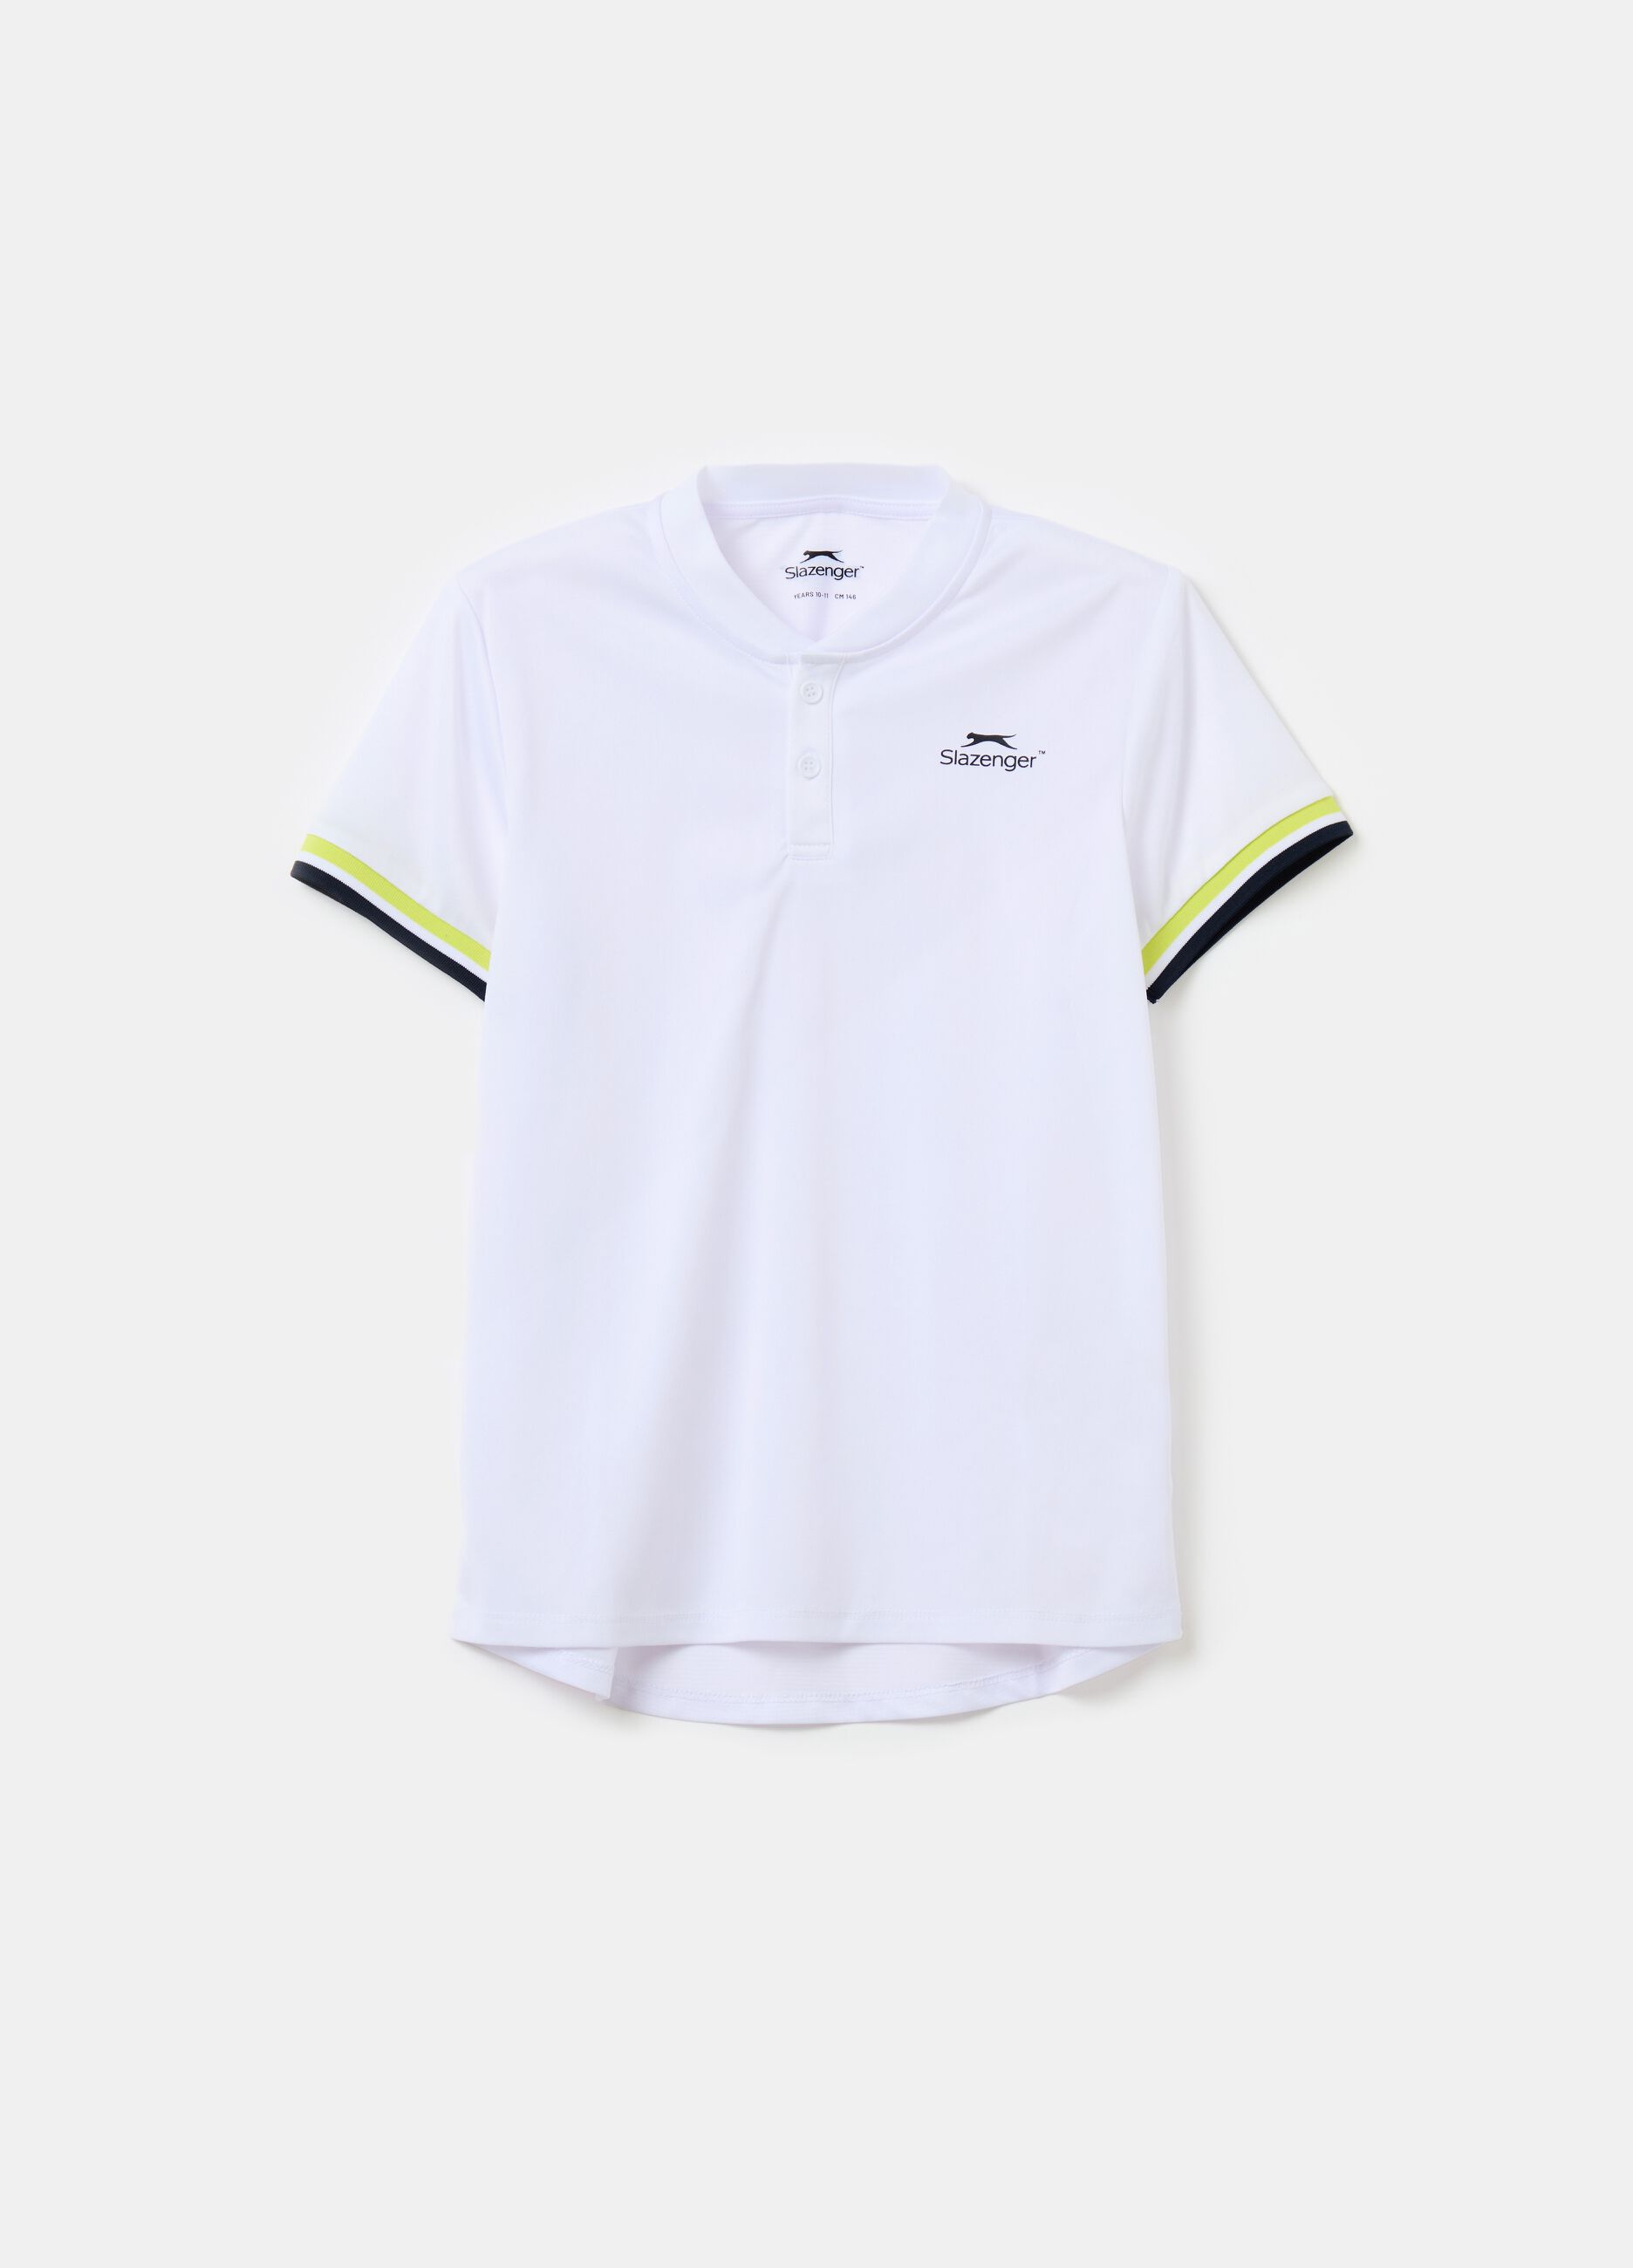 Slazenger tennis polo shirt with mandarin collar